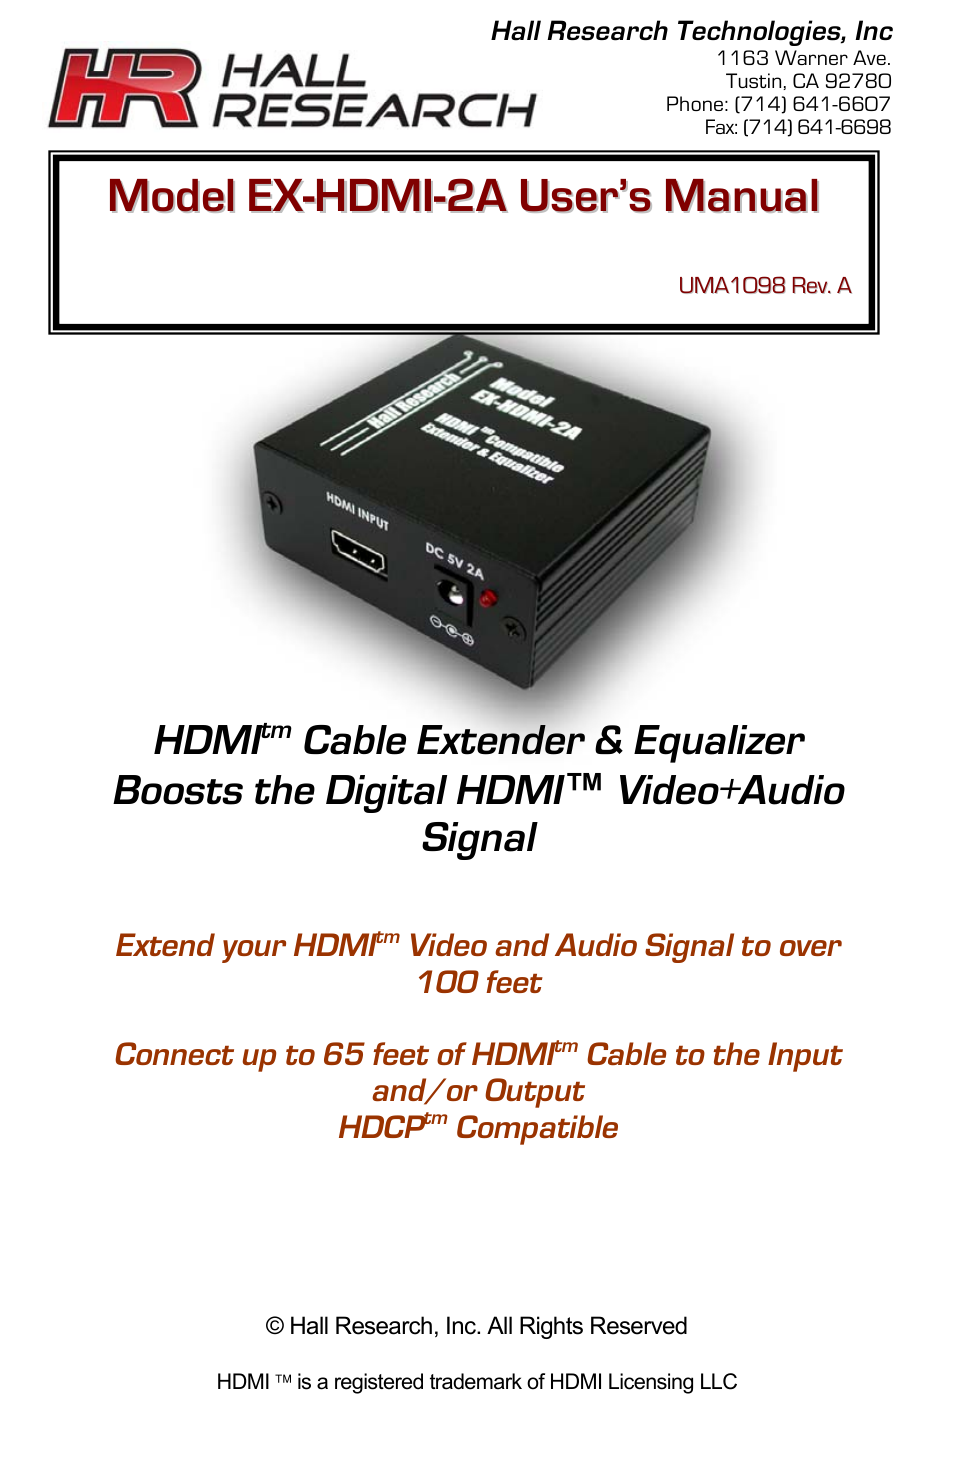 EX-HDMI-2A